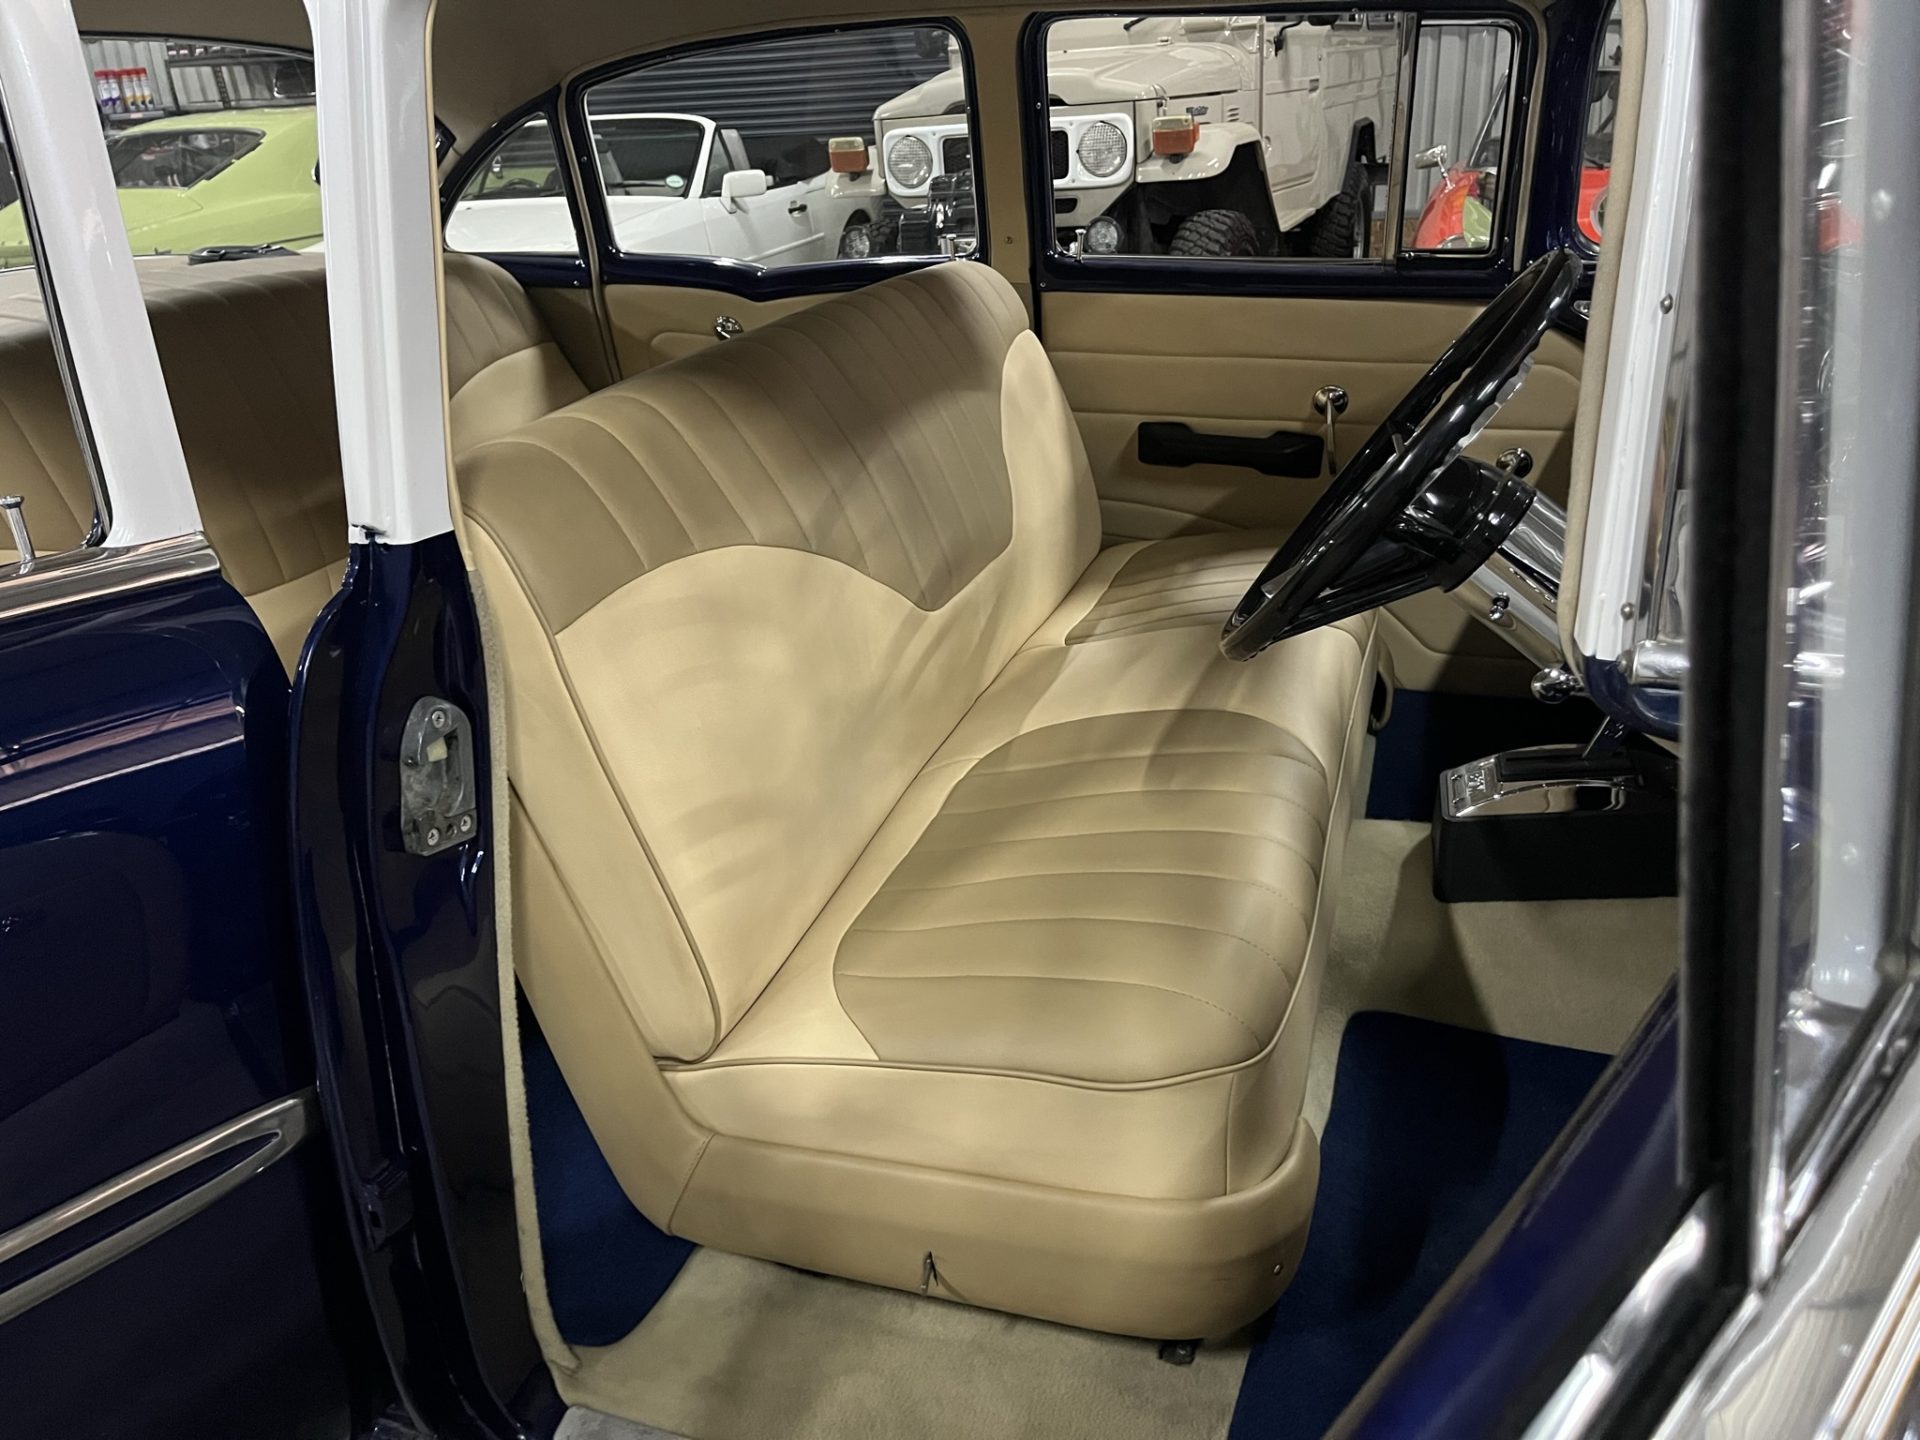 1955 Chevrolet Bel Air V8 RHD